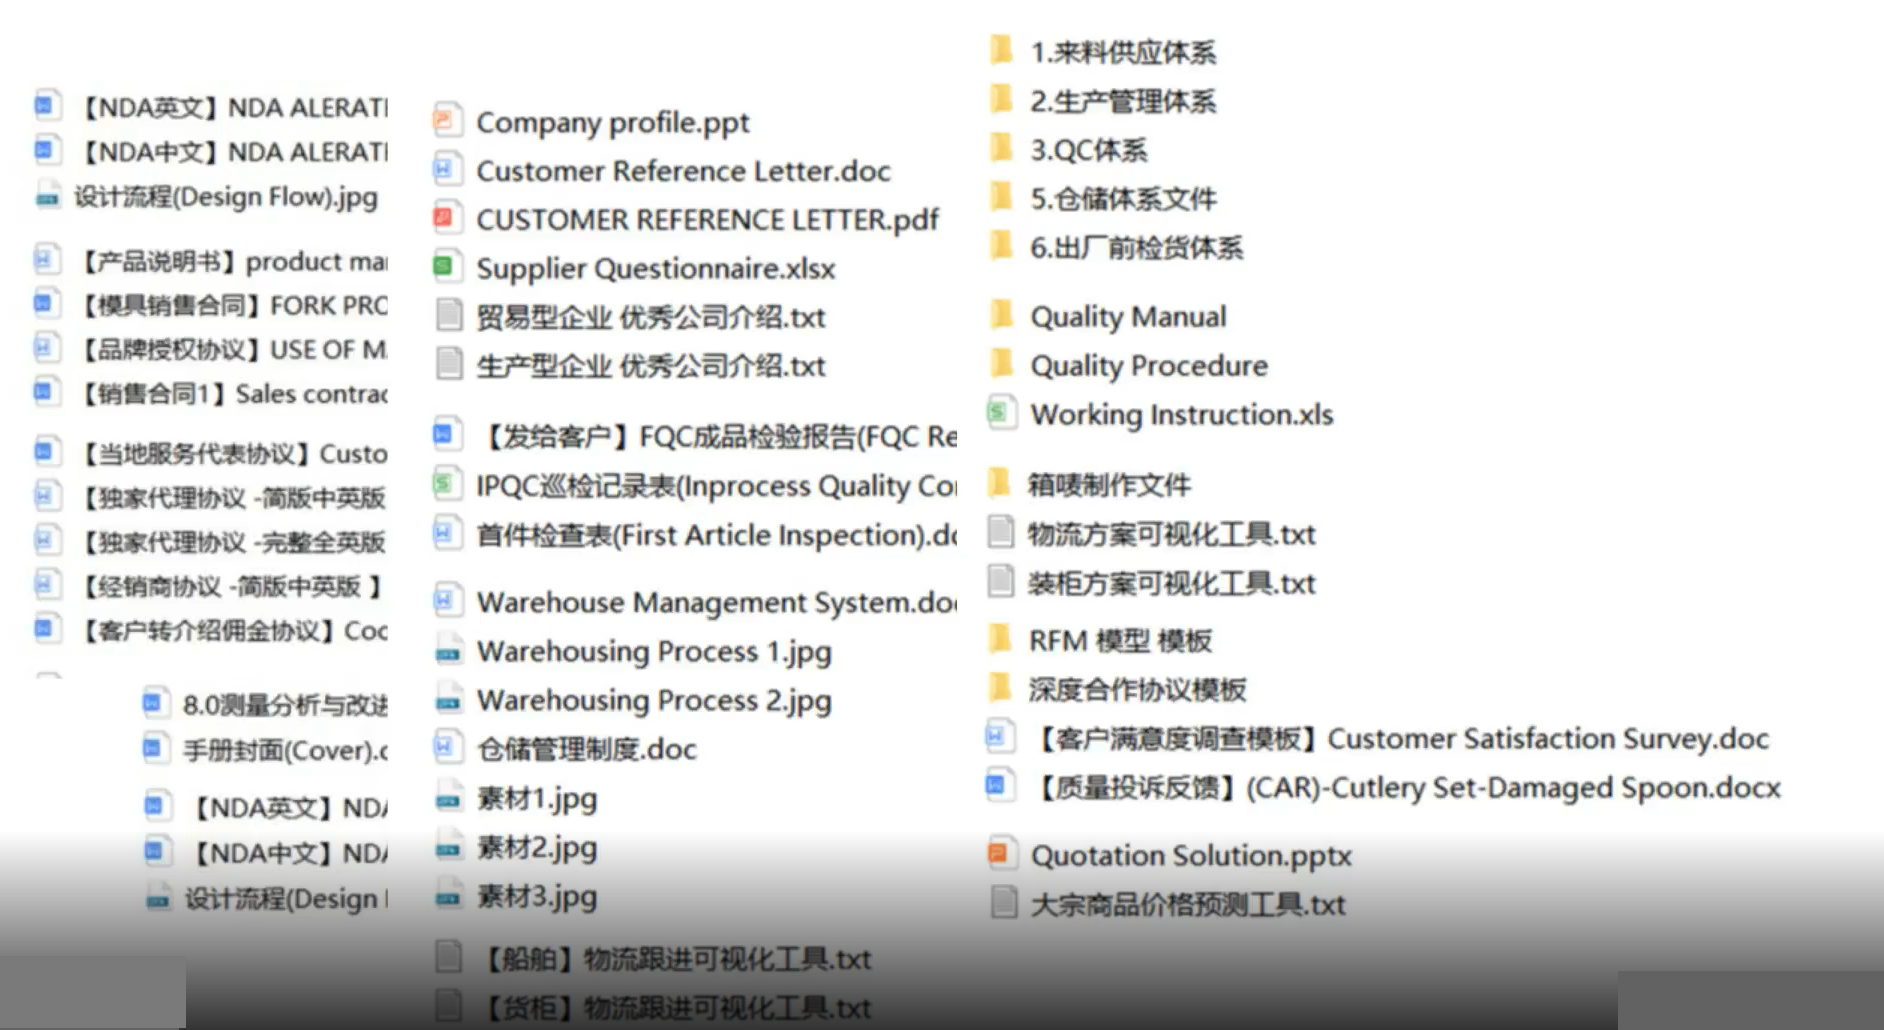 Brandmate Display Quality Control Files